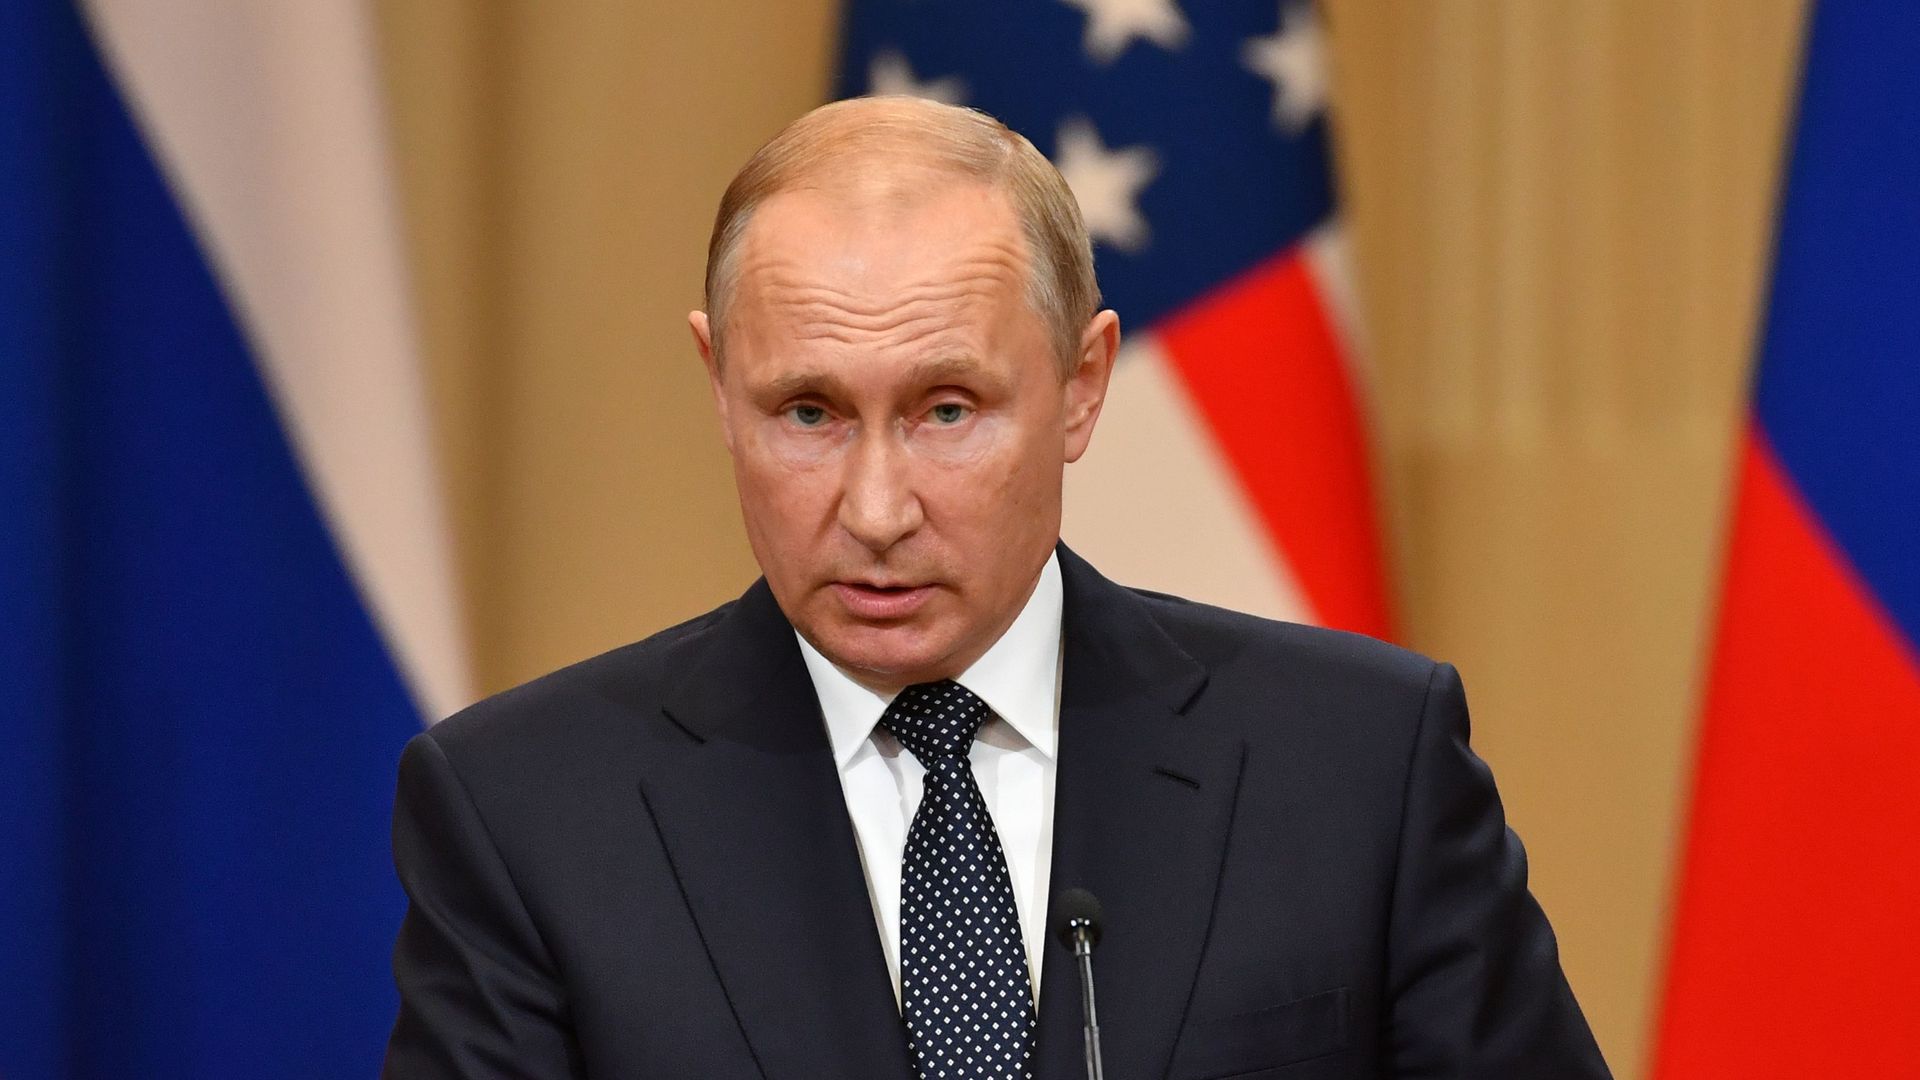 Vladimir Putin looks caught off guard, standing at a podium before a U.S. flag.